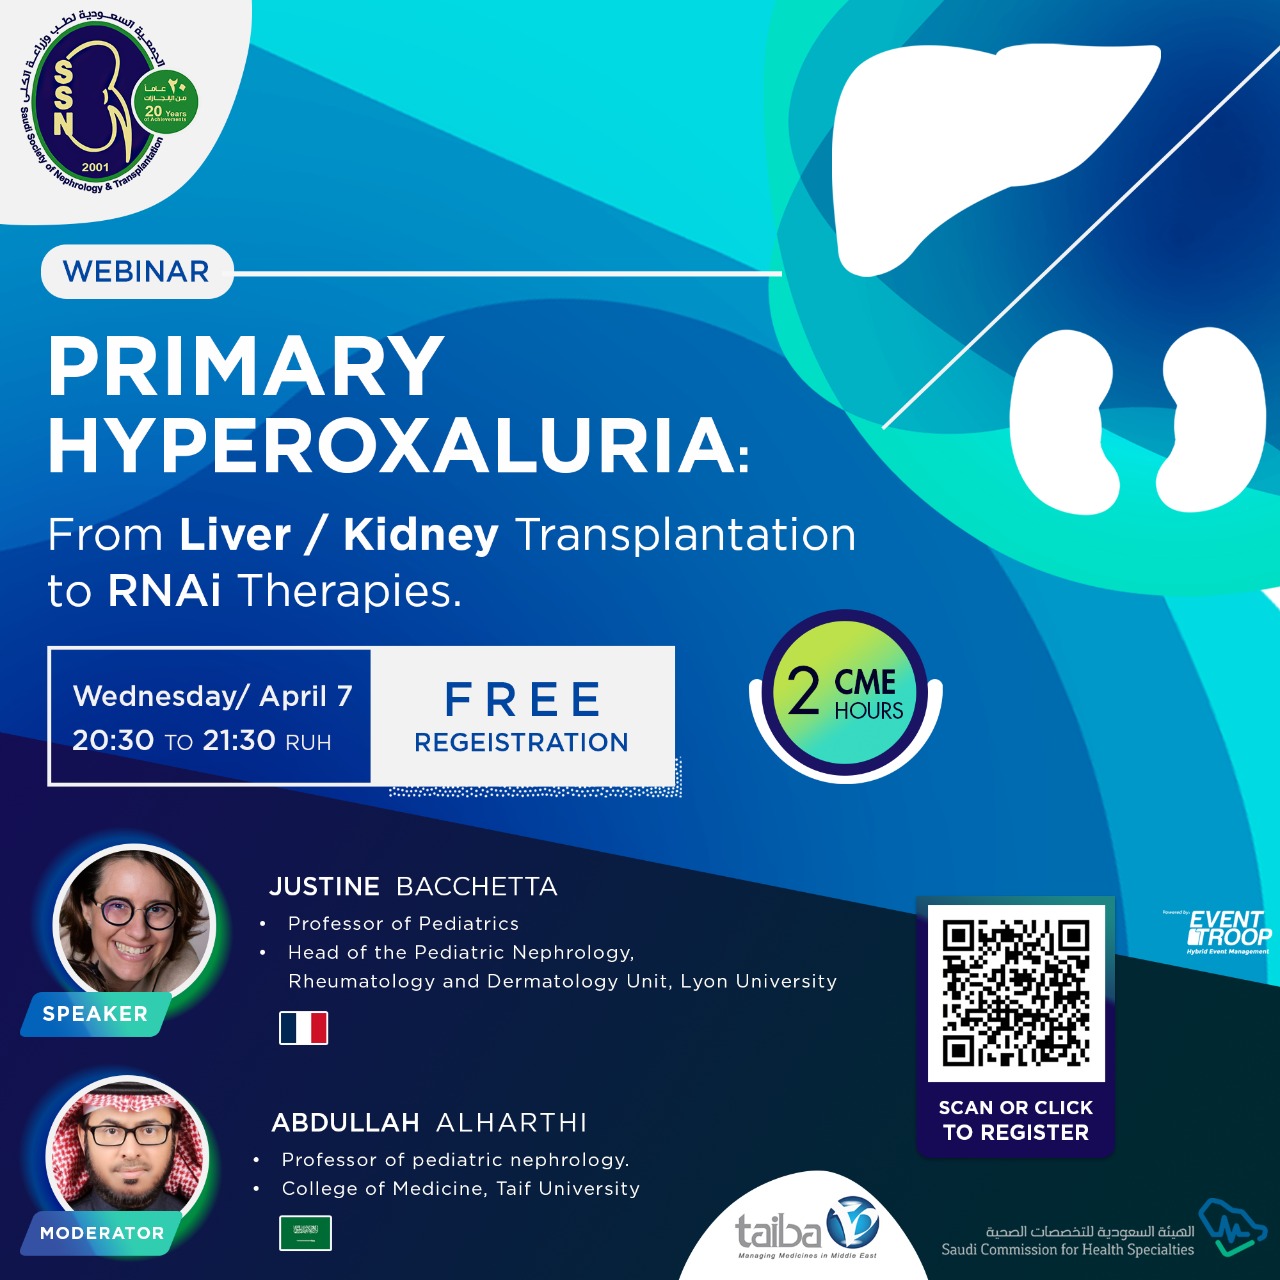 Upcoming Webinar: Primary Hyperoxaluria: From Liver/Kidney Transplantation to RNAi Therapies